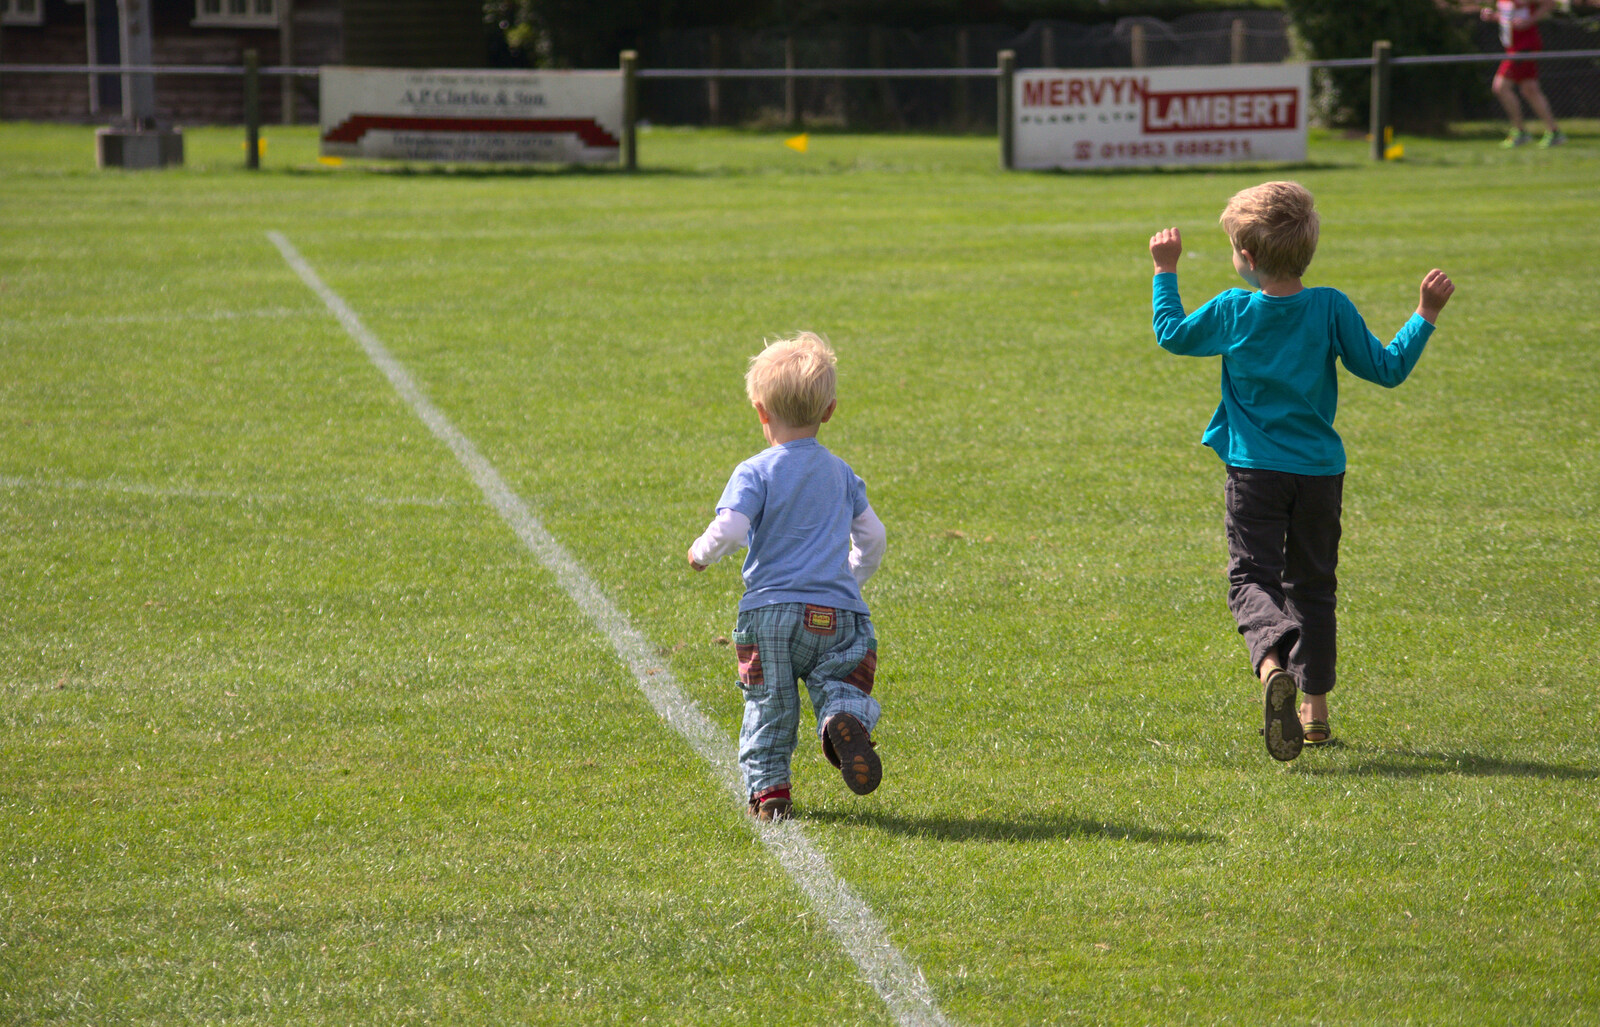 Harry and Fred do their running bit from The Framlingham 10k Run, Suffolk - 31st August 2014